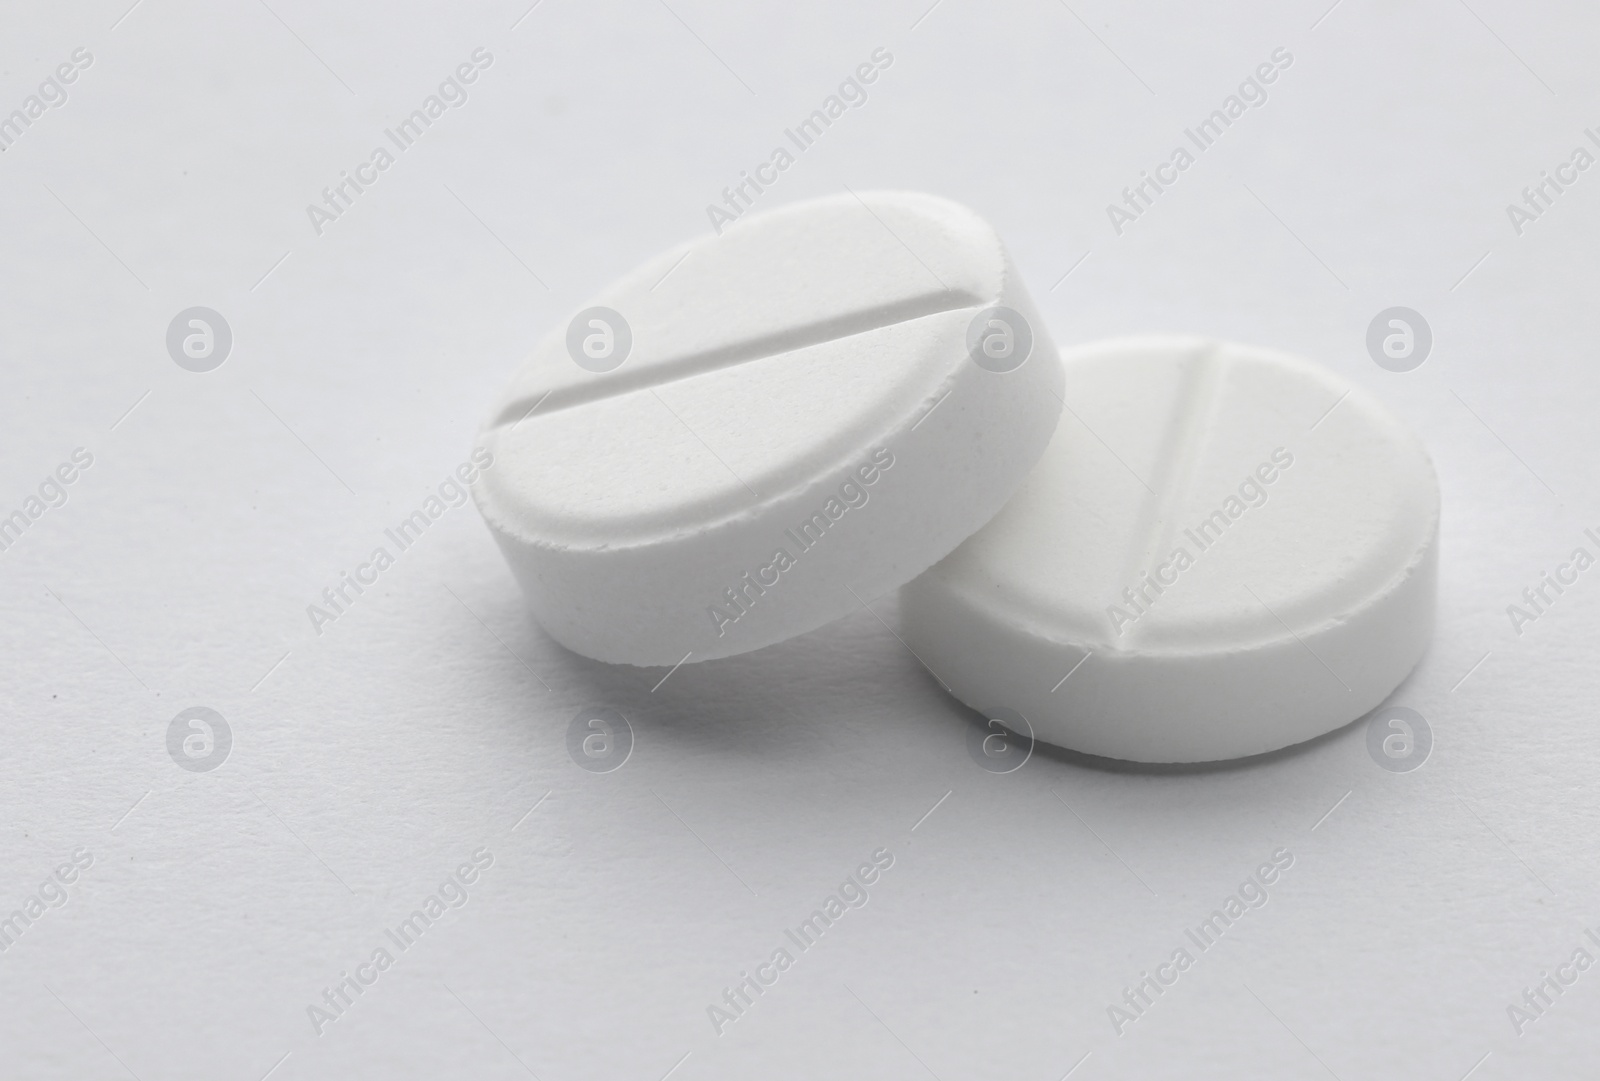 Photo of Pills on white background. Medical treatment